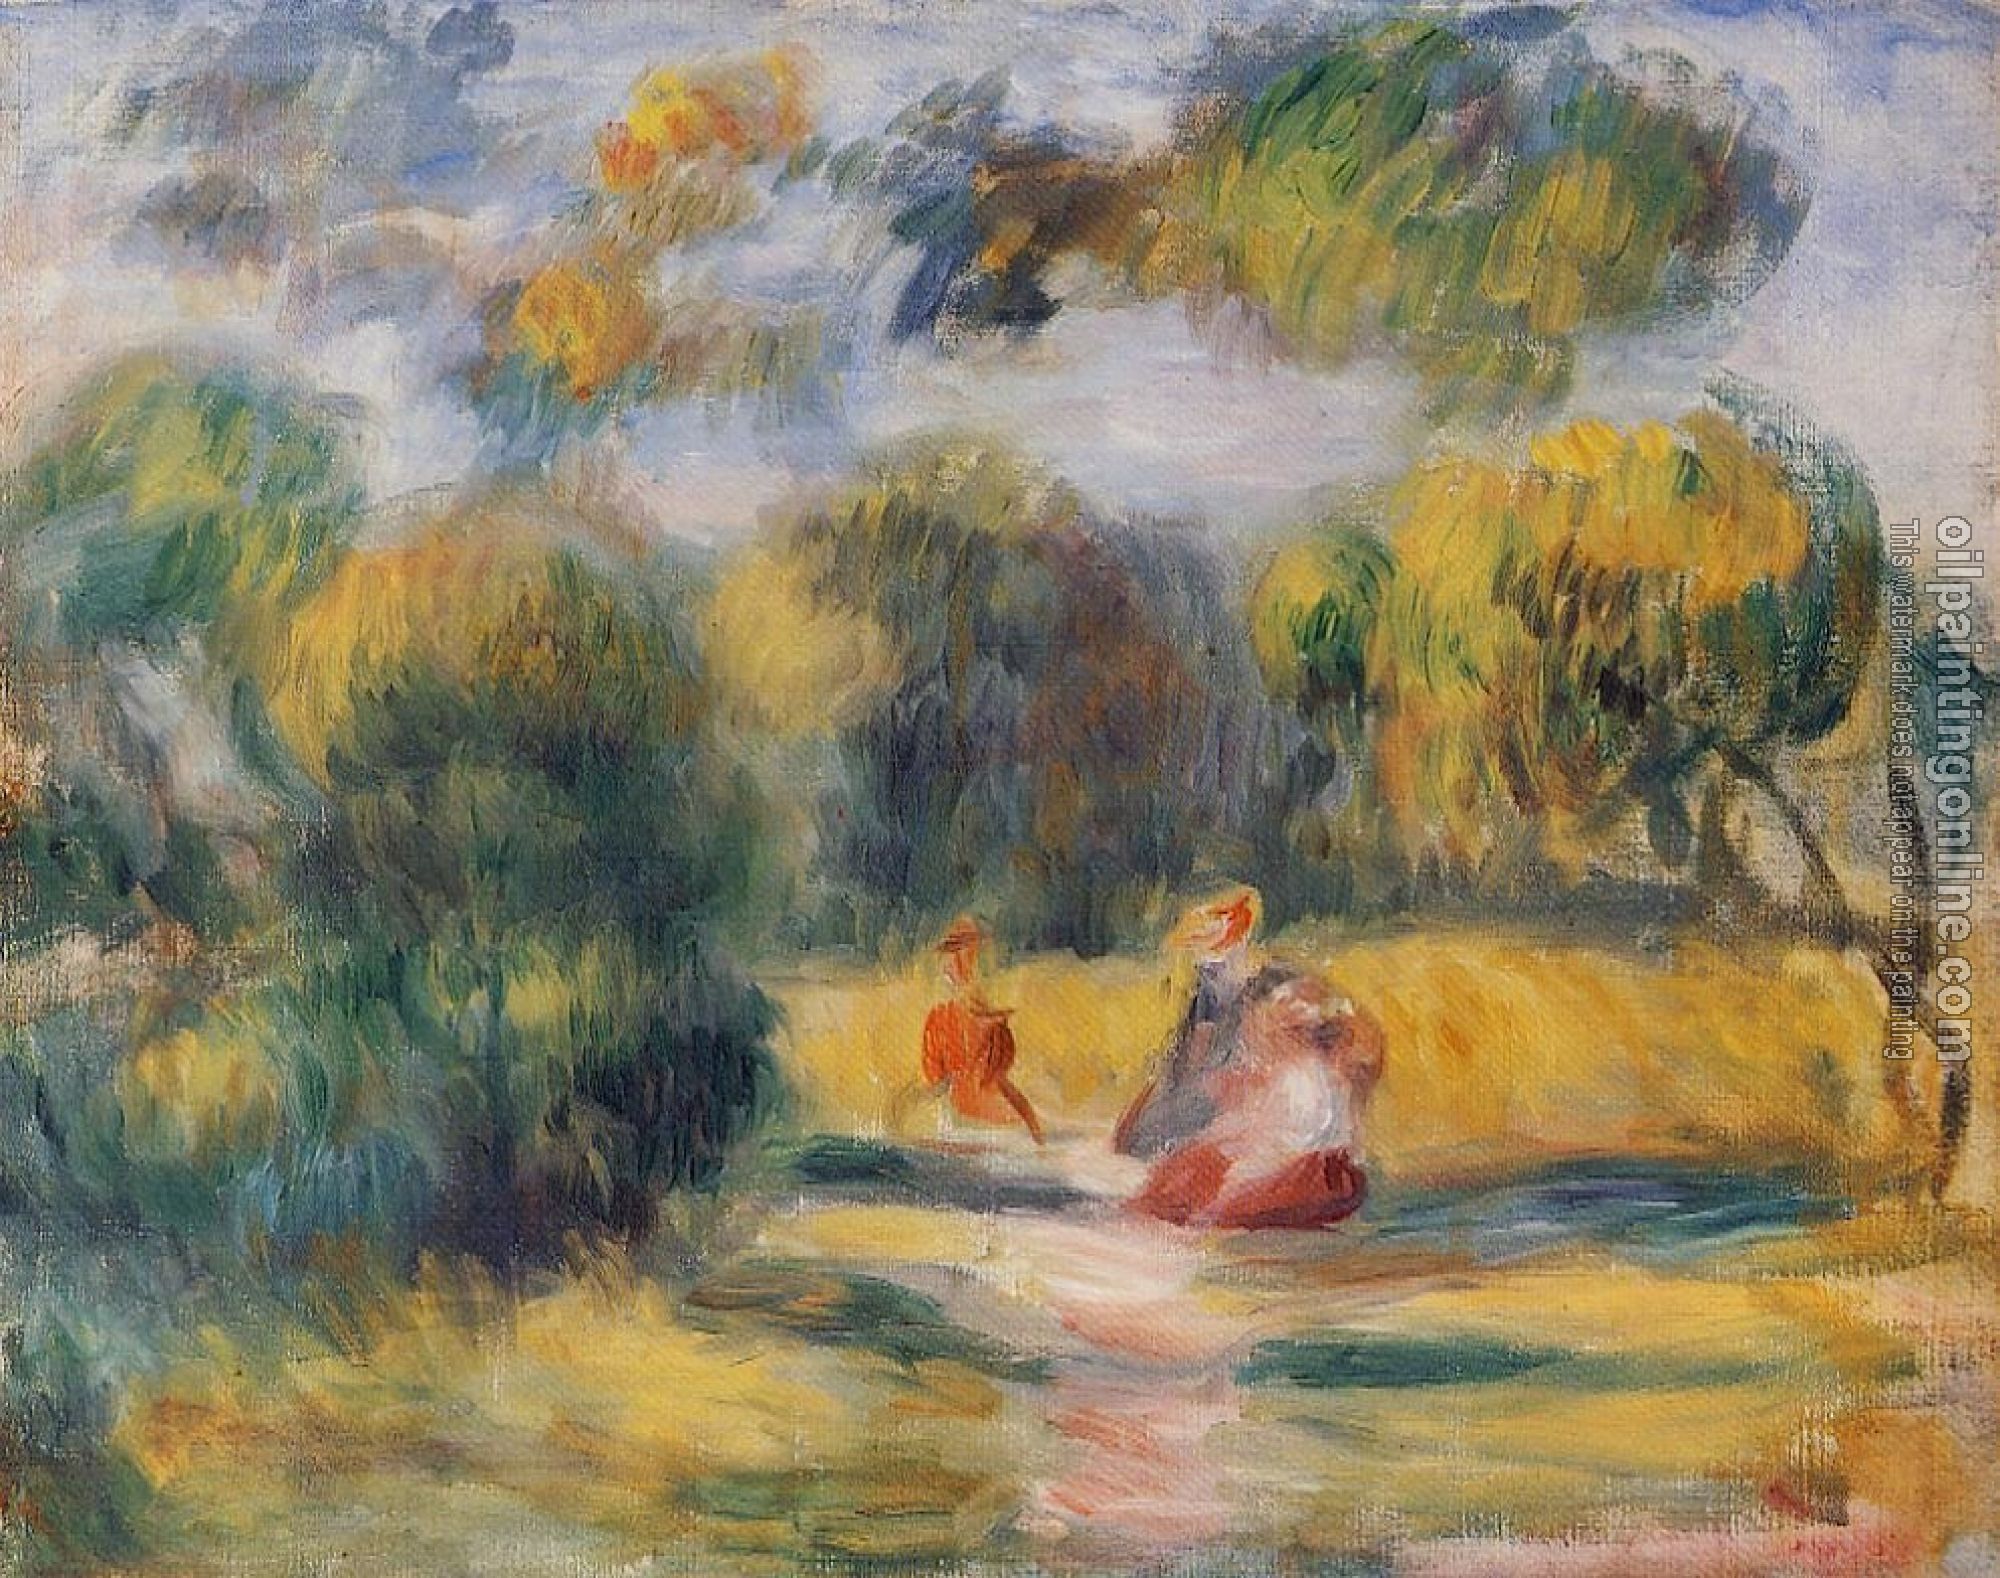 Renoir, Pierre Auguste - Figures in a Landscape